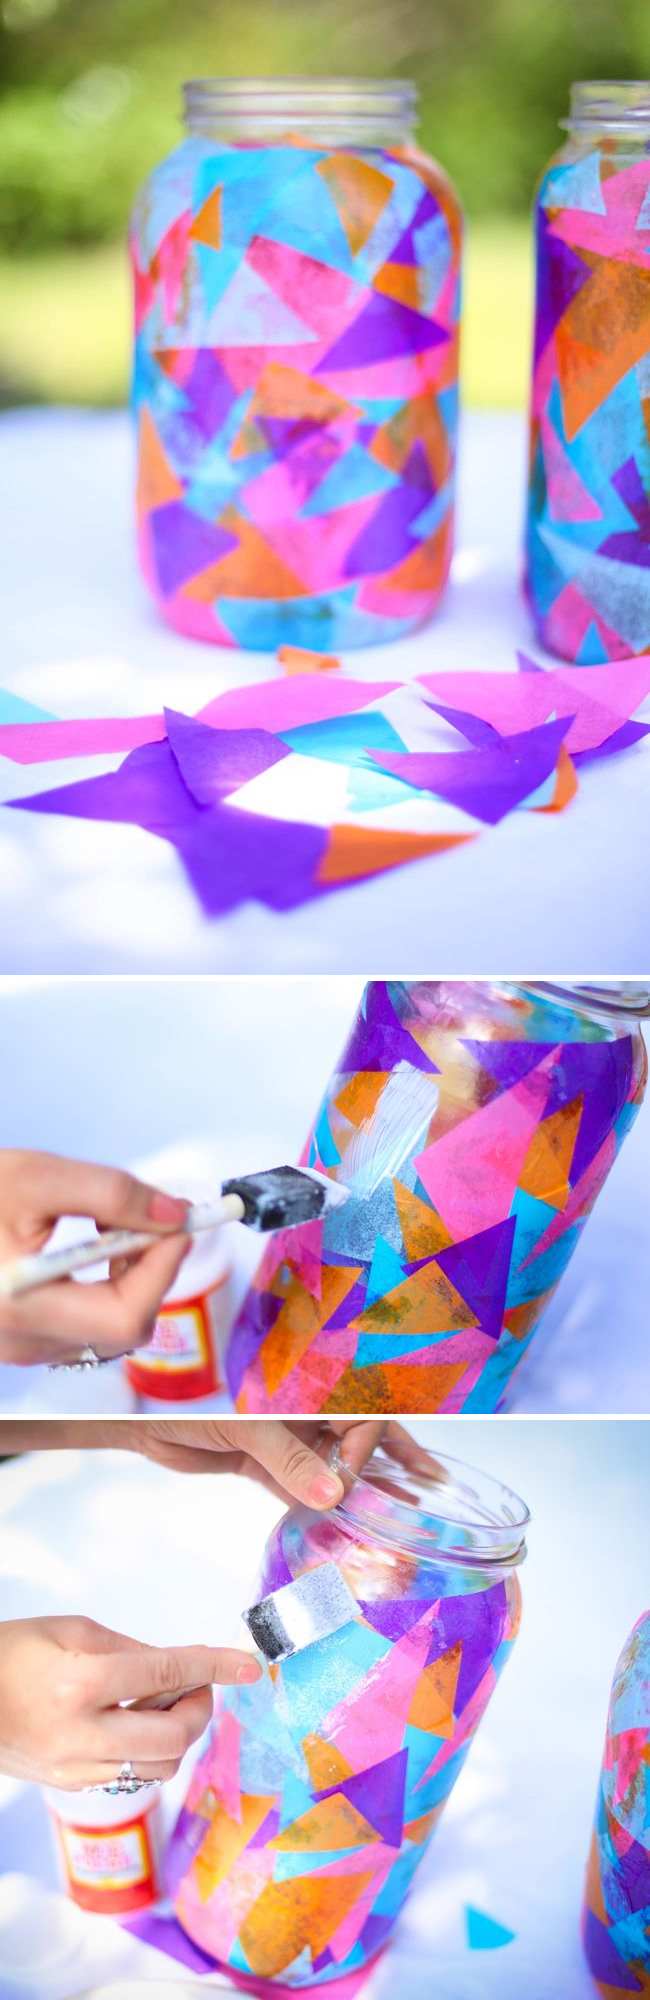 Lyktor-trädgård fest-silkespapper-färgglada-geometriska